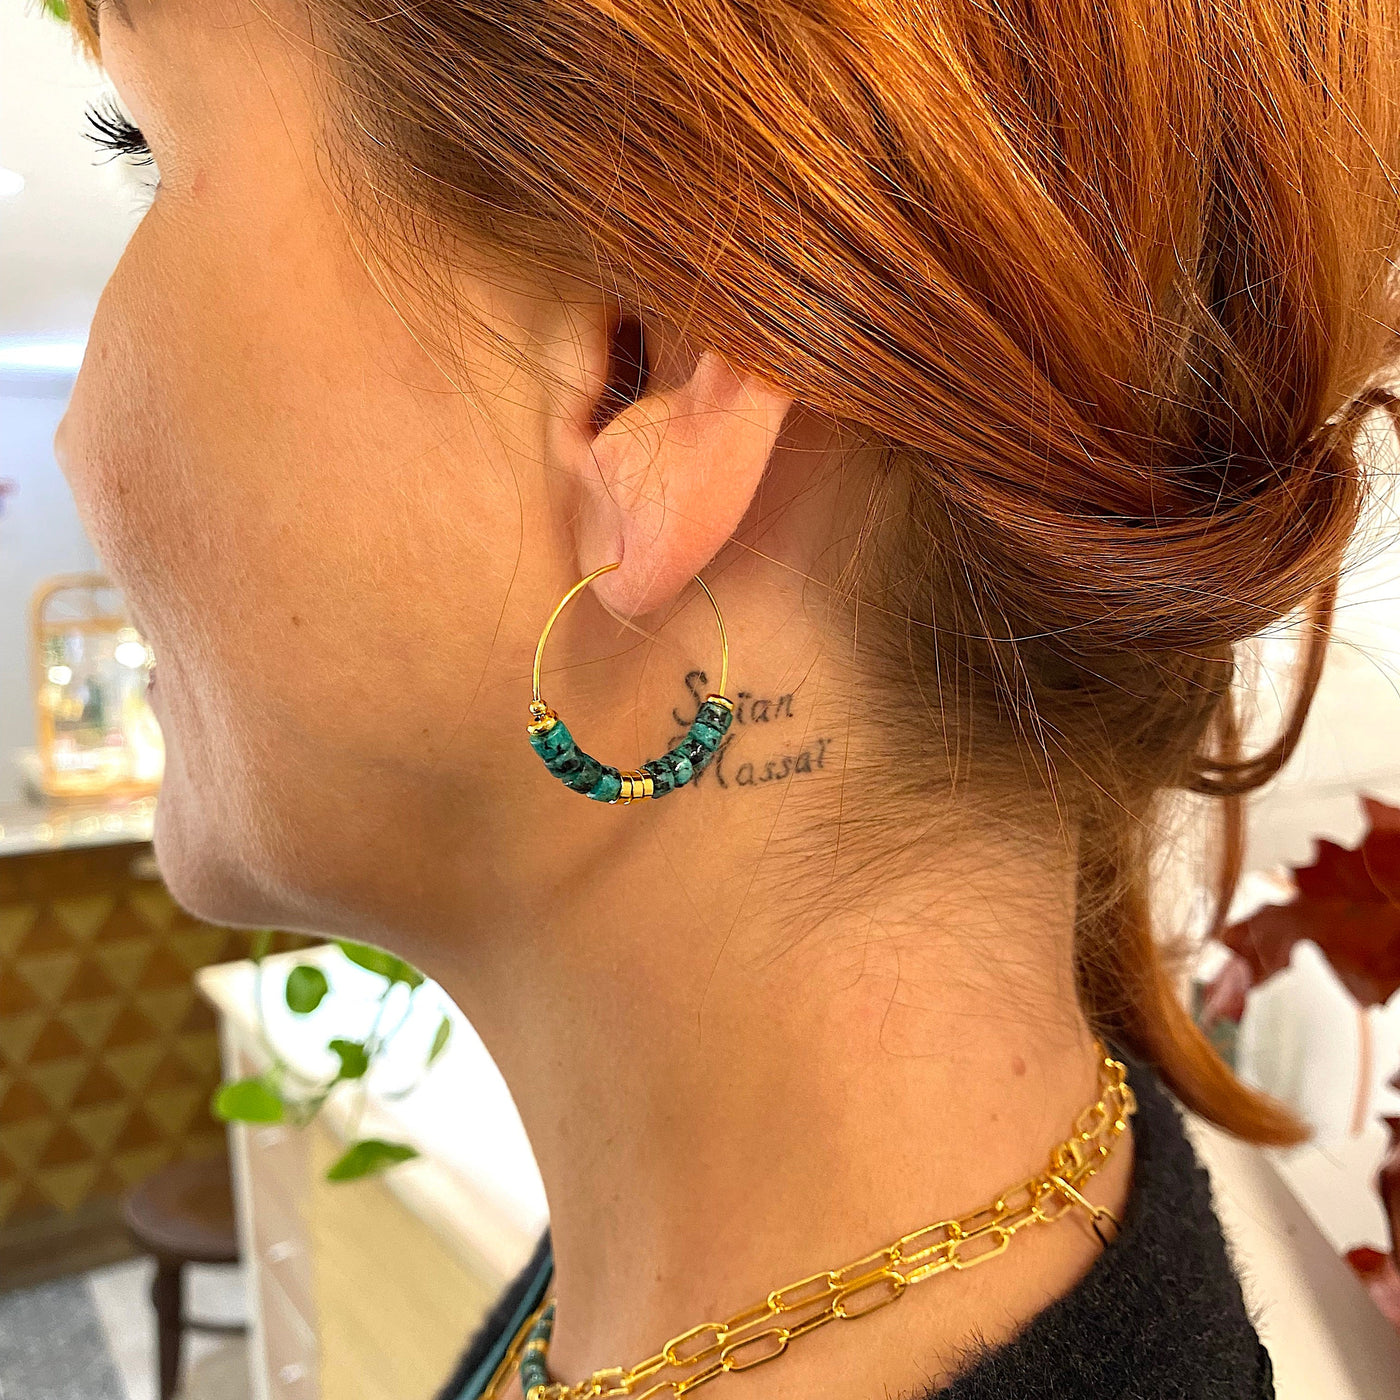 EDDY - Green gold plated earrings